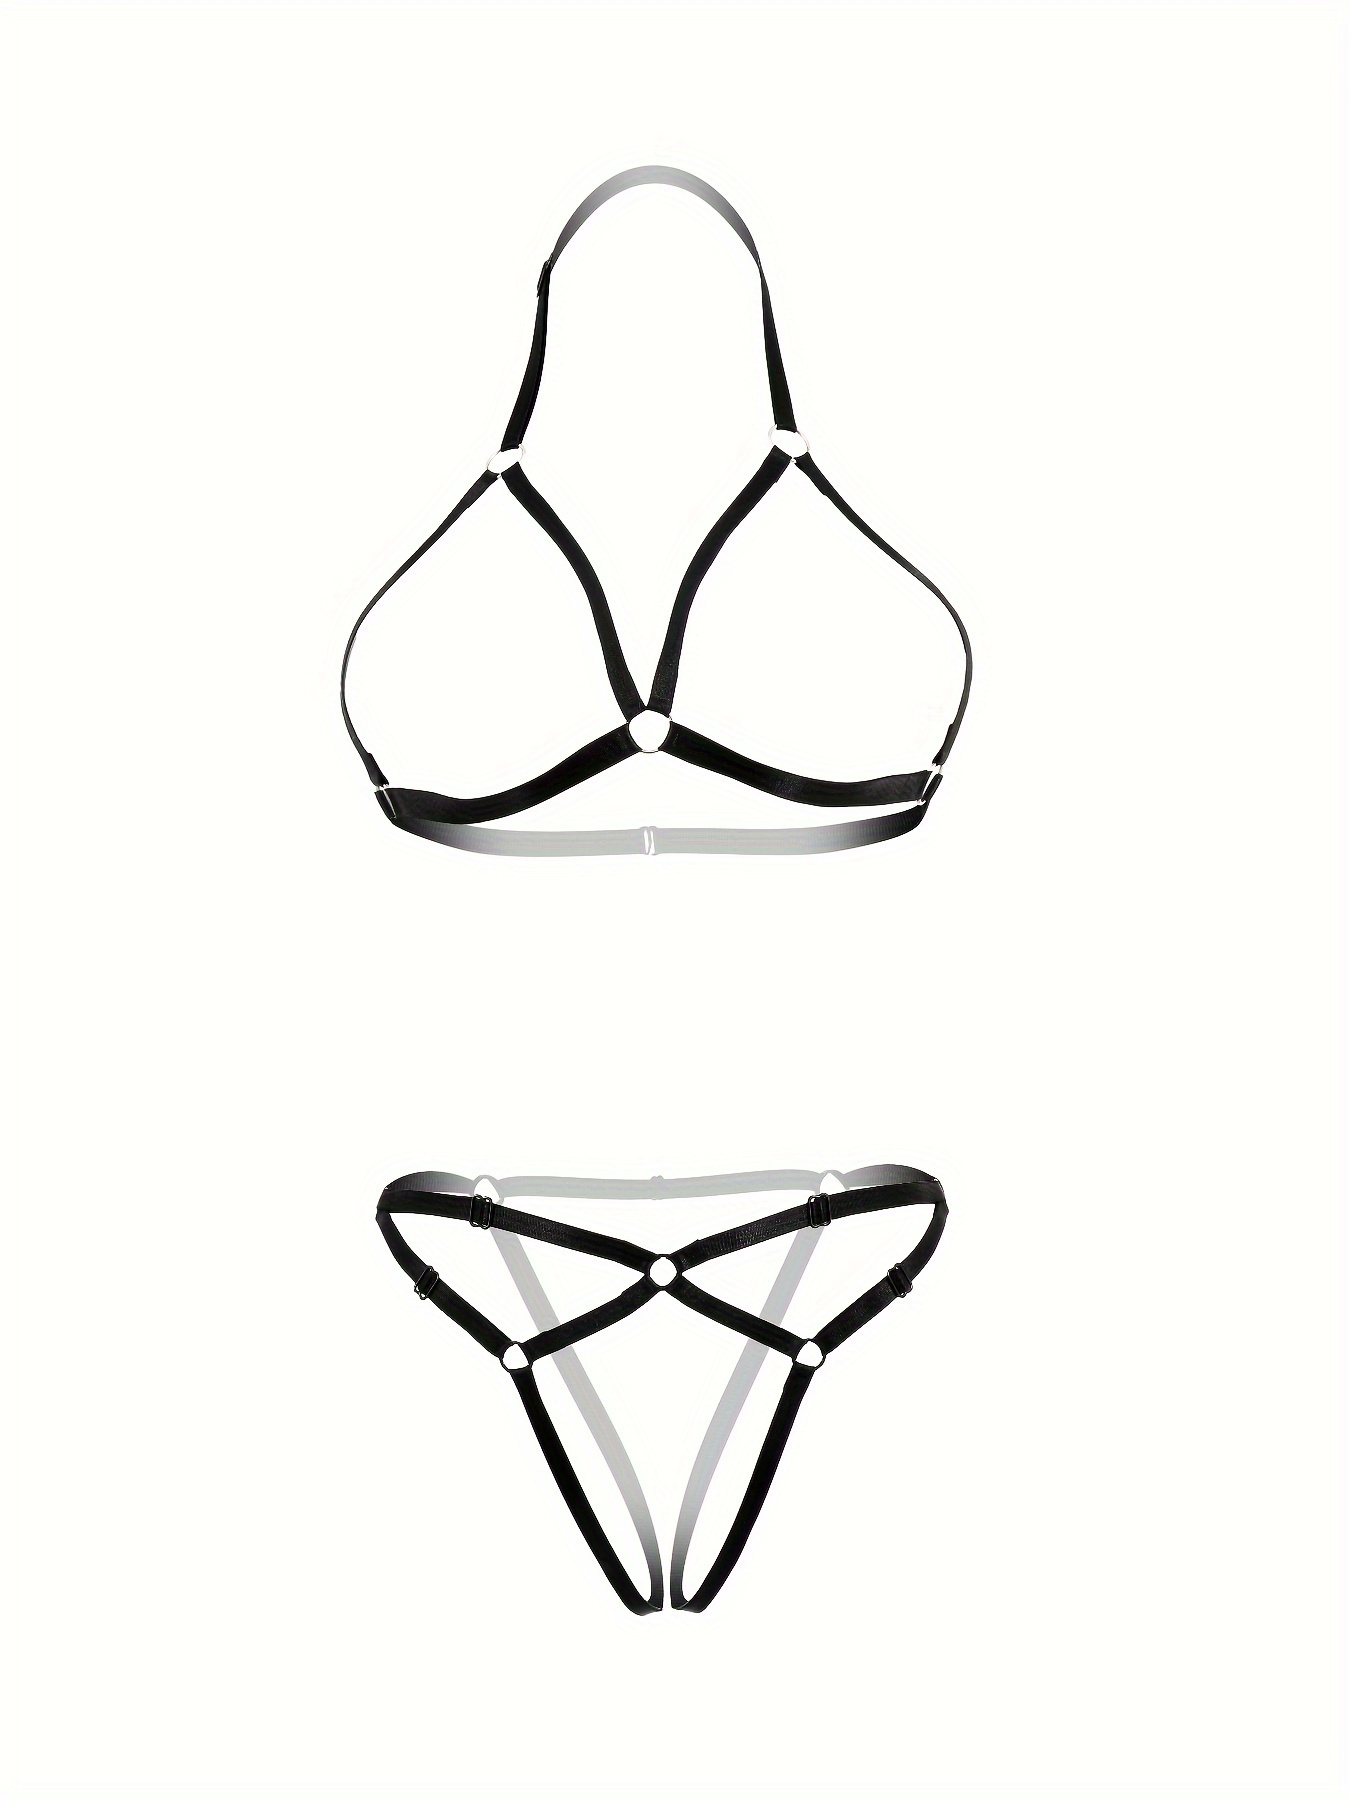 Buy WuyiMC Sexy Lingerie Underwear Set Open Cup Bra + Panty Nylon